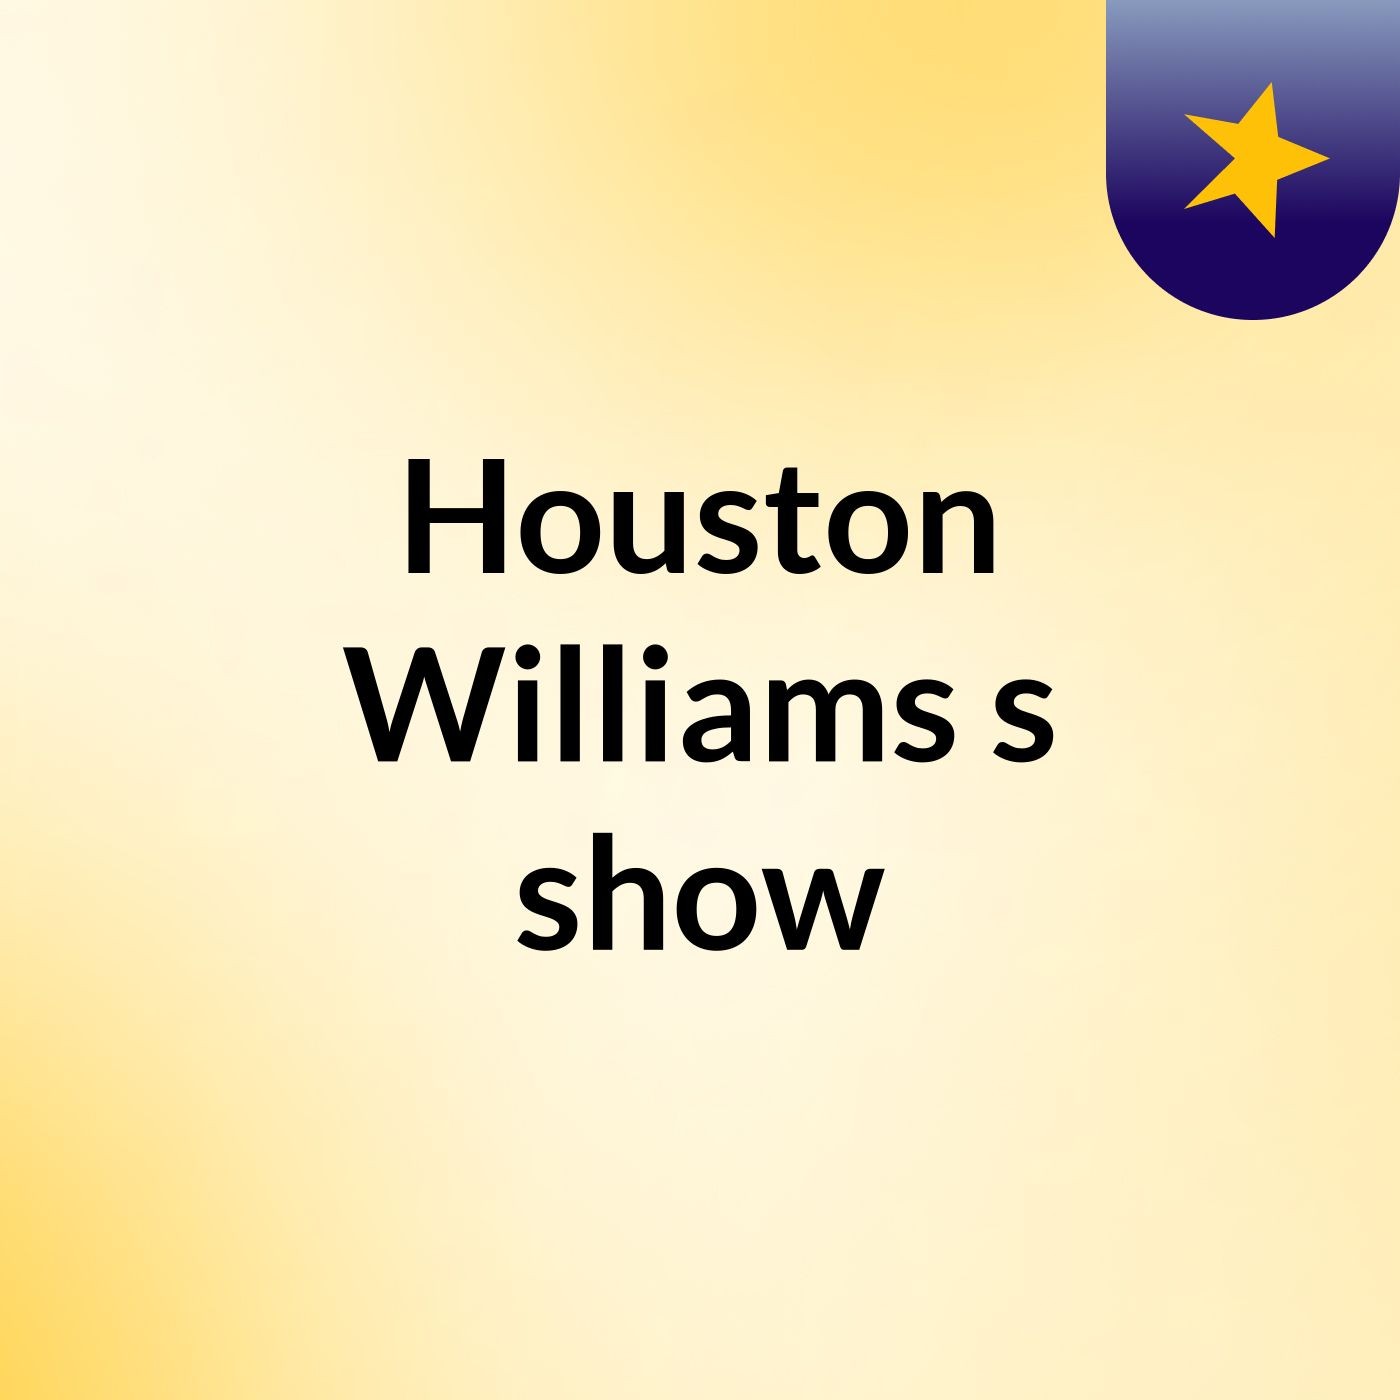 Houston Williams's show